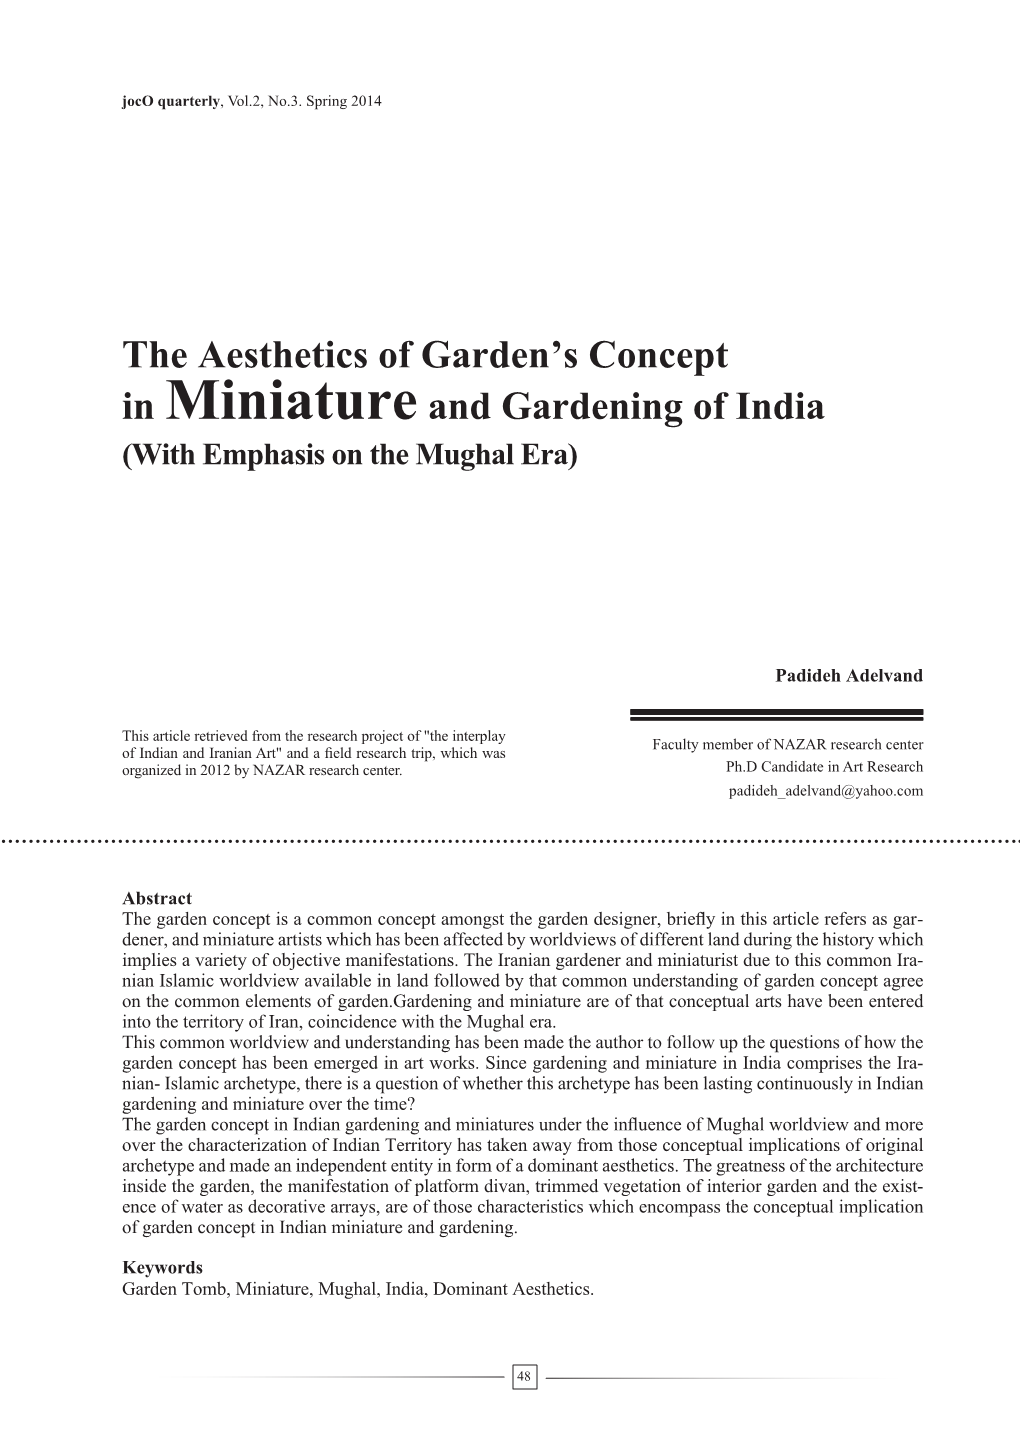 The Aesthetics of Garden's Concept in Miniatureand Gardening of India